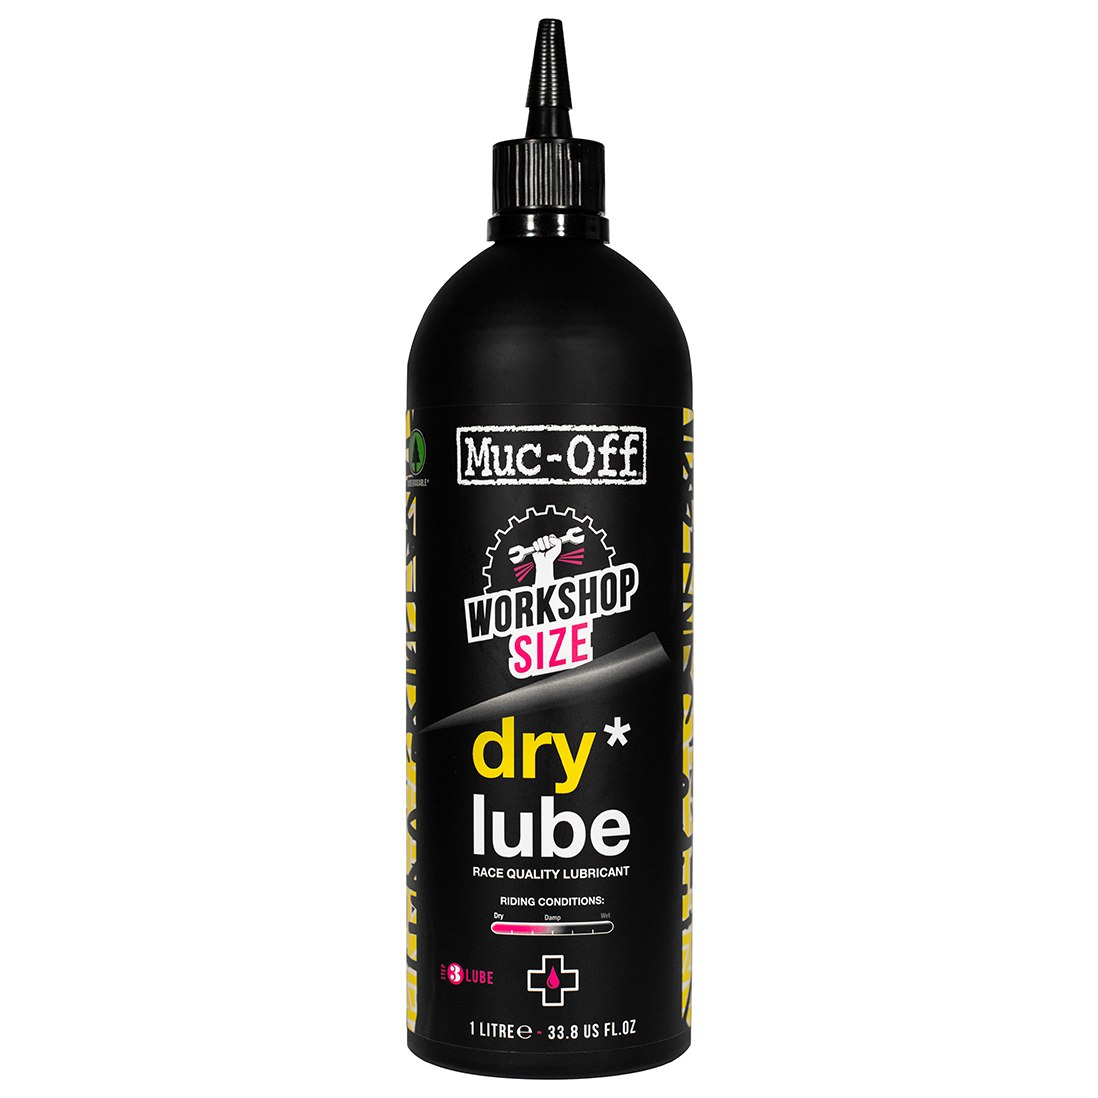 Productfoto van Muc-Off Dry Lube Lubricant - 1 Liter